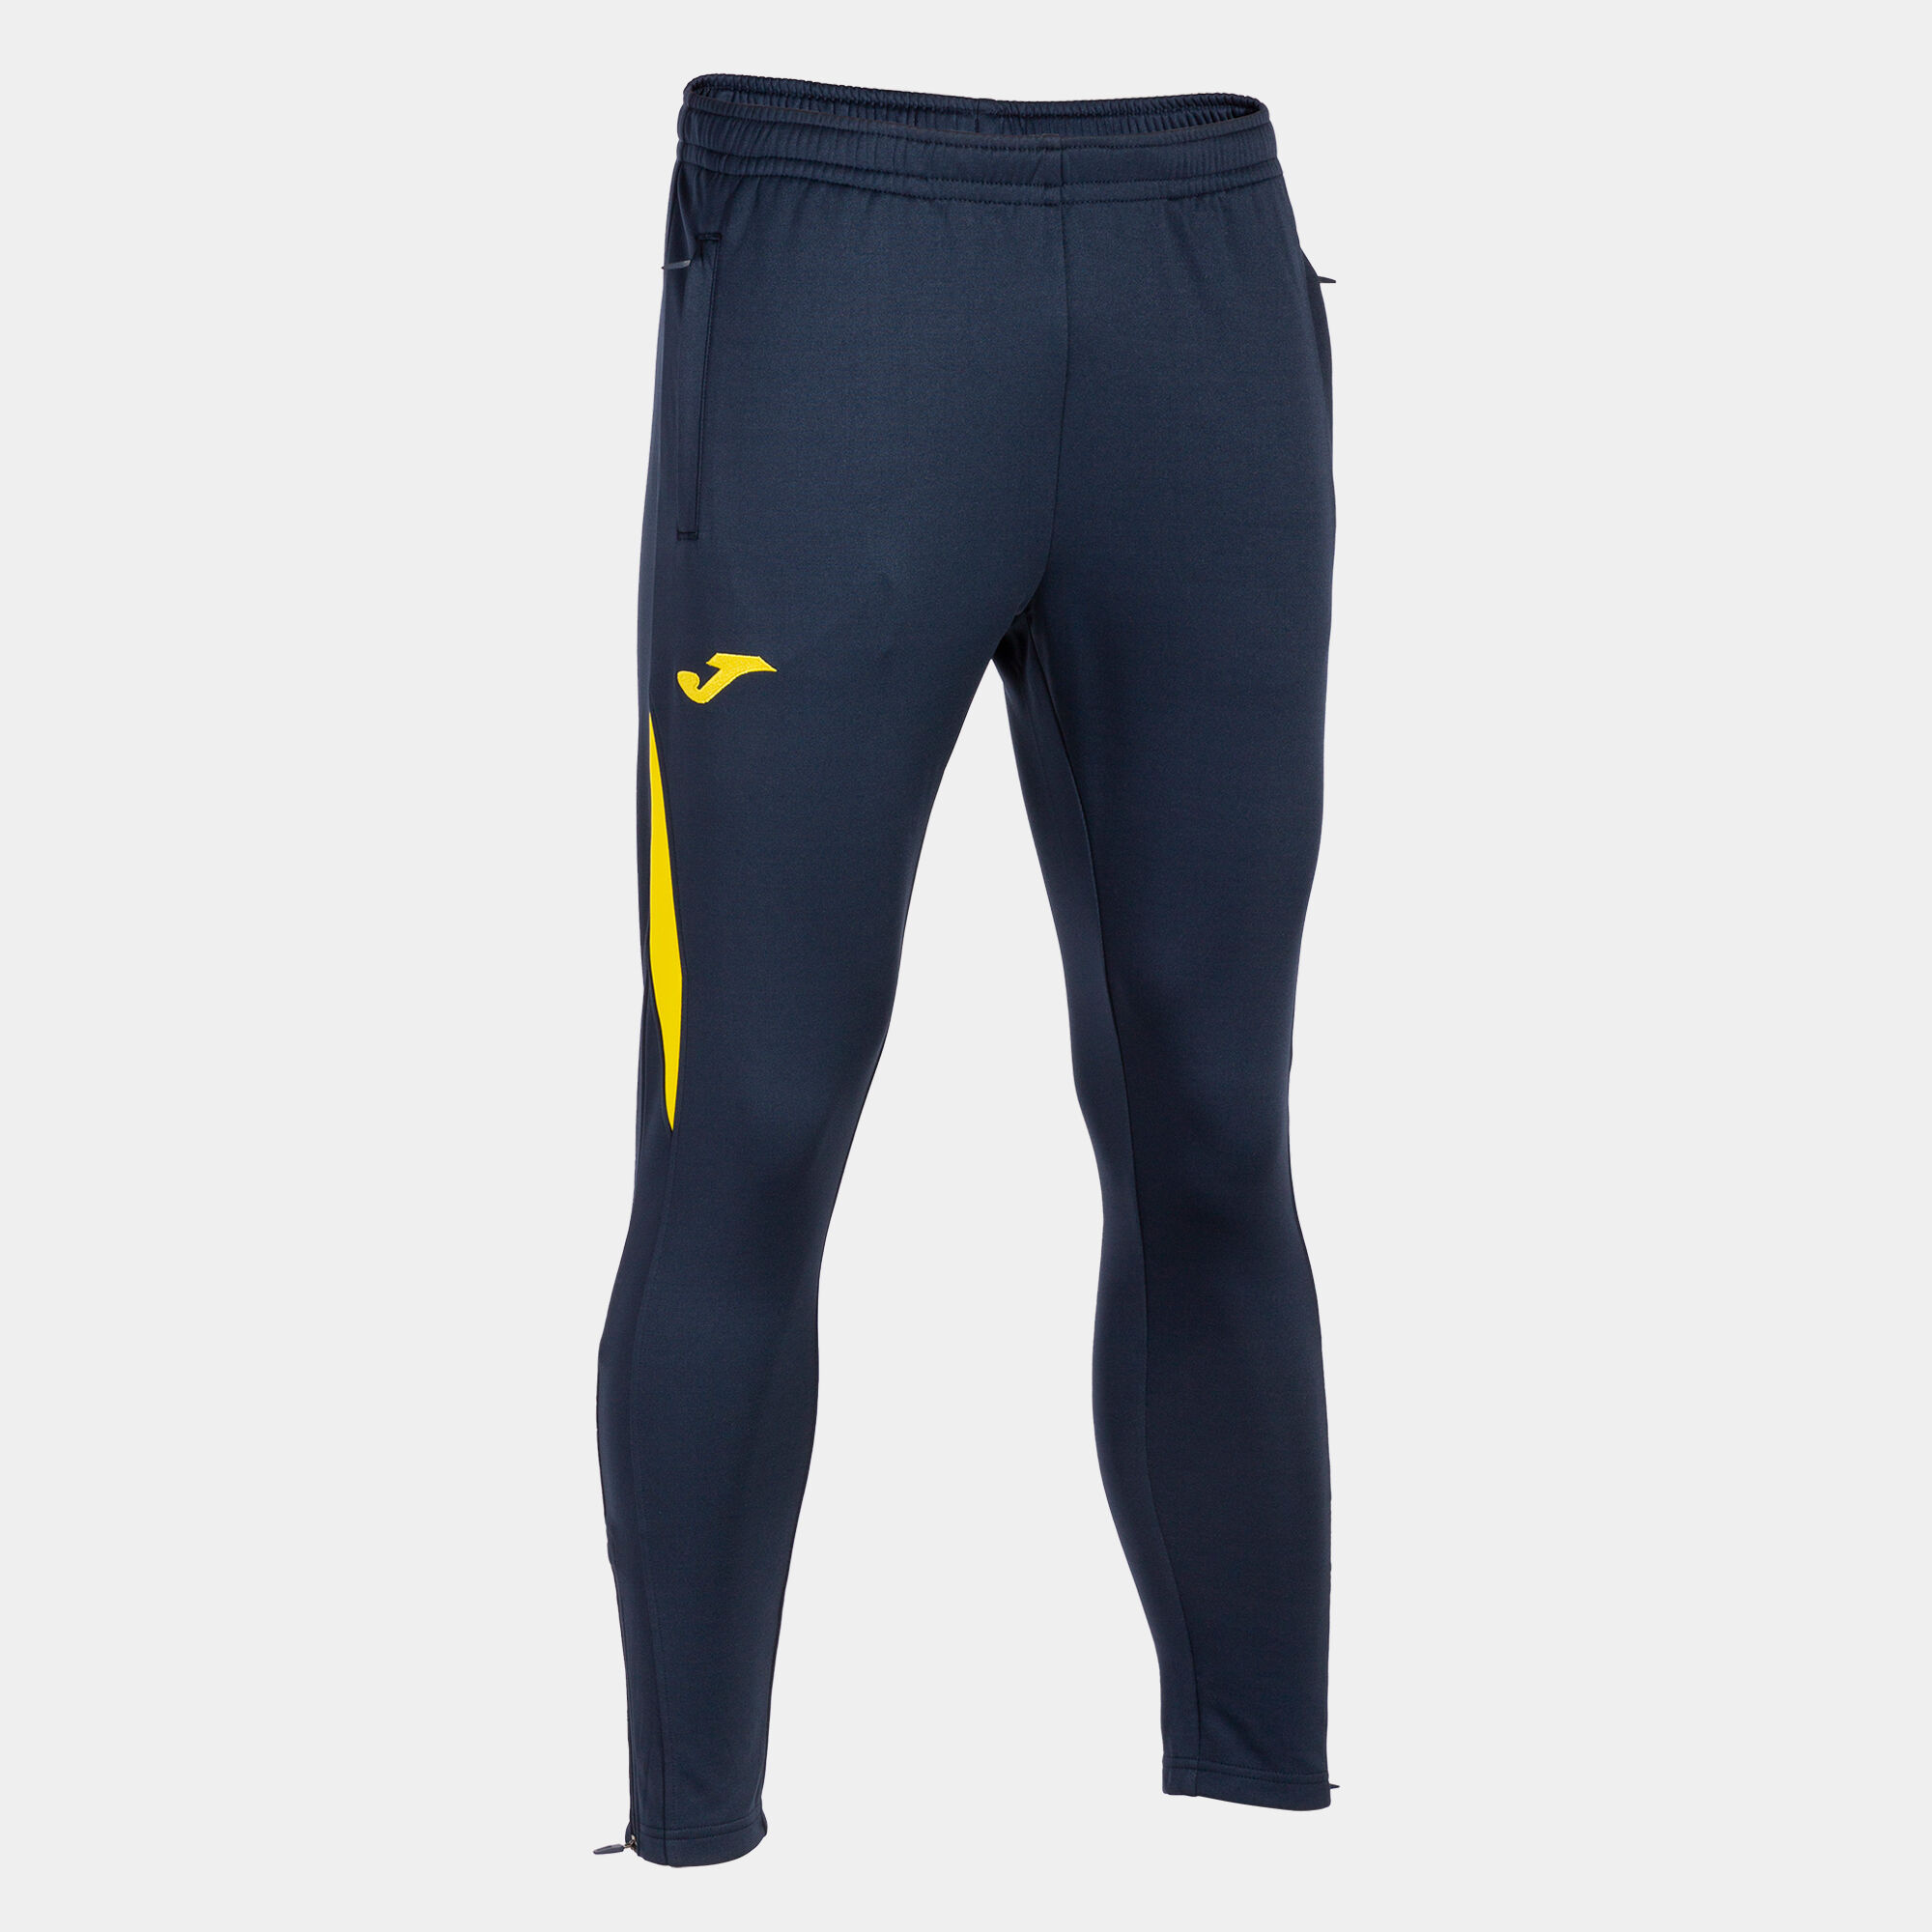 Pantalone lungo uomo Championship VII blu navy giallo